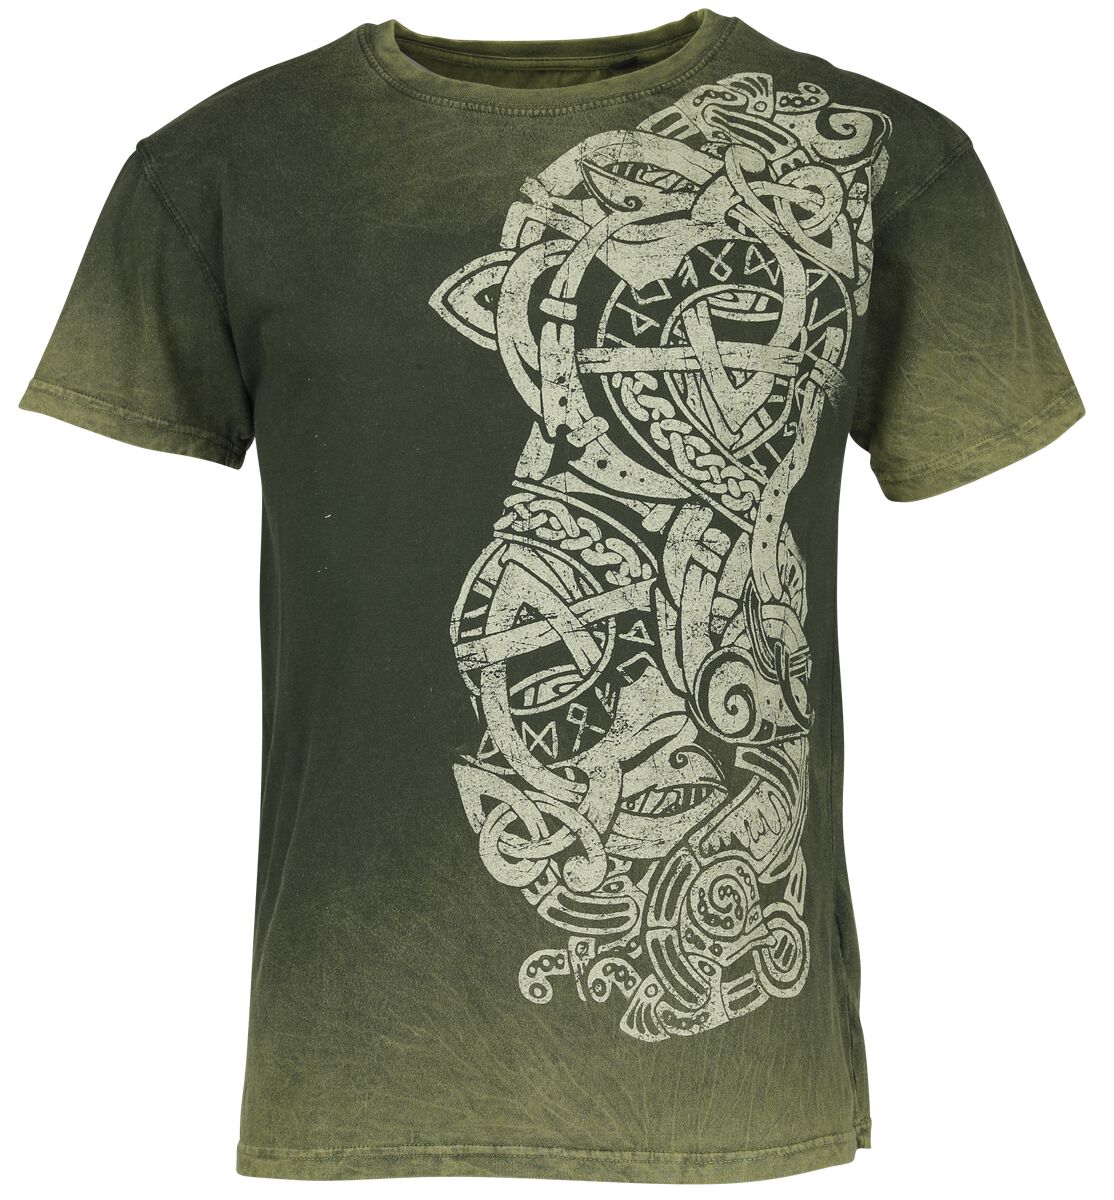 Outer Vision T-Shirt - Bucaneer Tattoo - S bis 4XL - für Männer - Größe S - grün